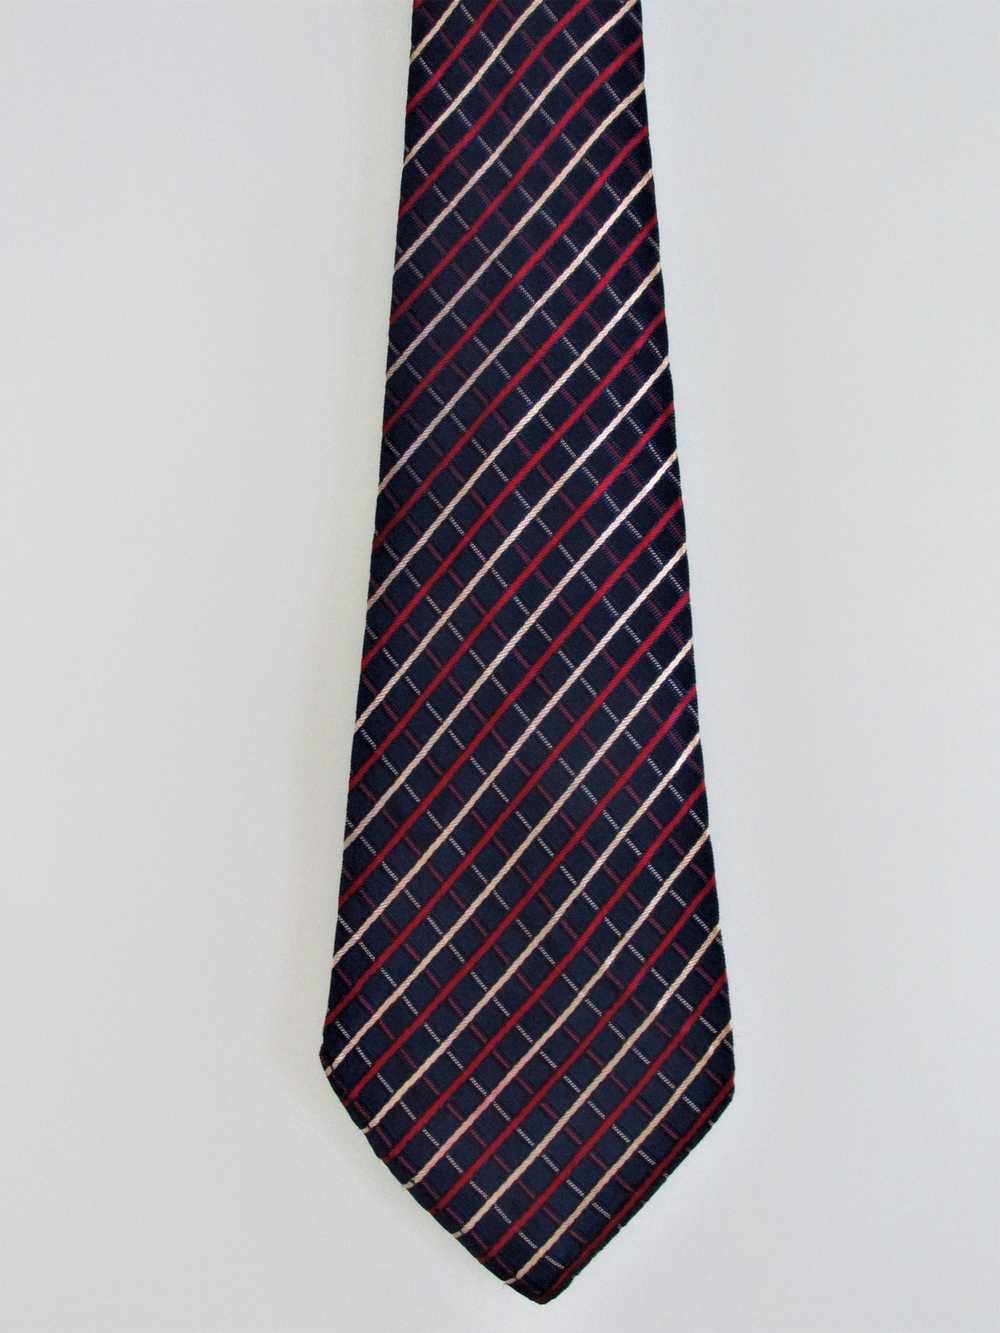 Haband Haband Vintage Men's Rayon Tie - image 2